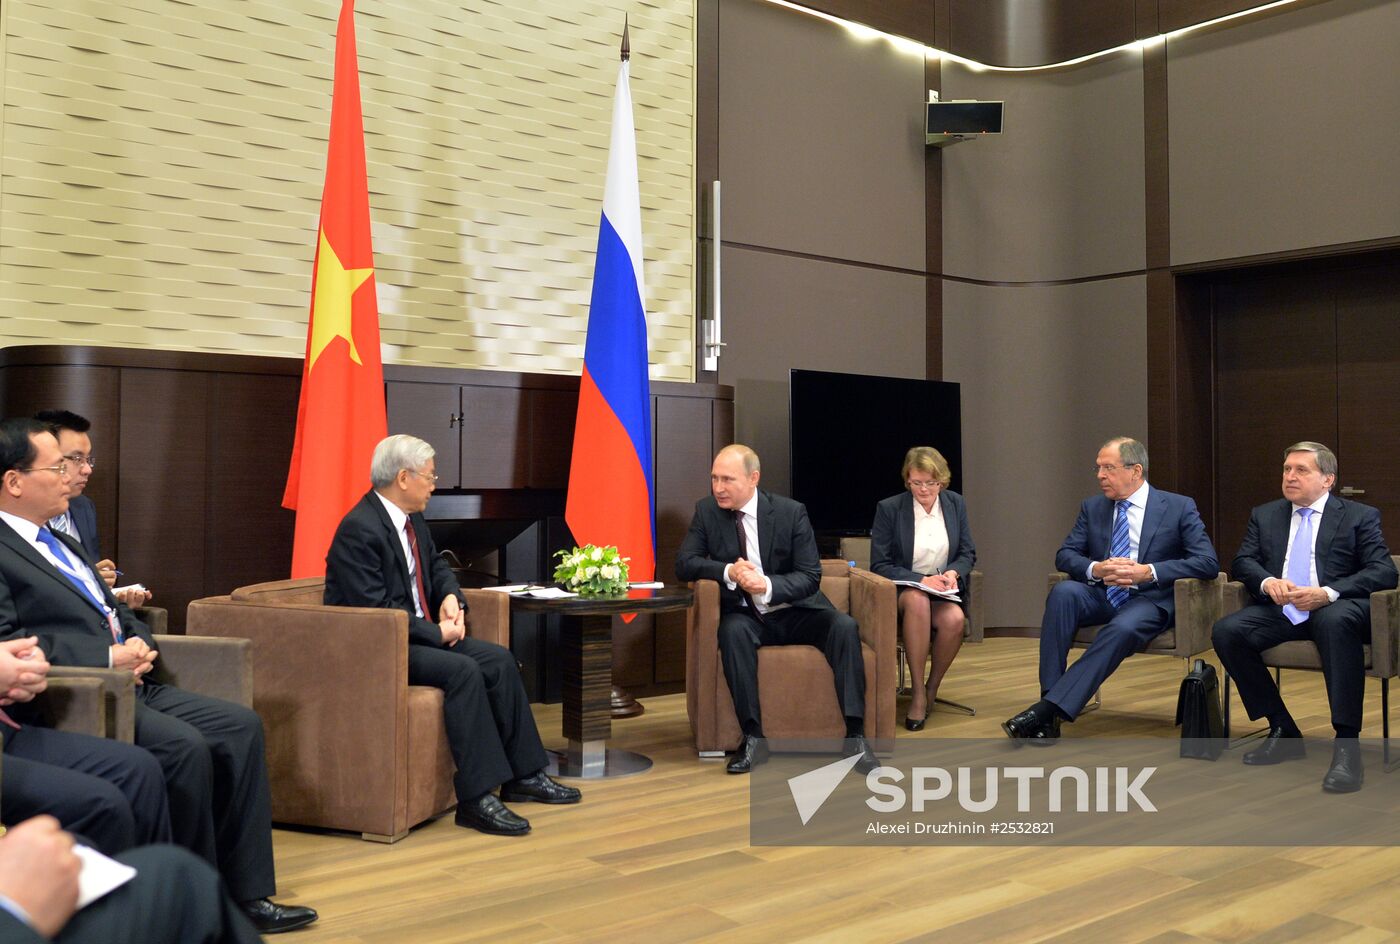 Vladimir Putin meets with Nguyen Phu Trong